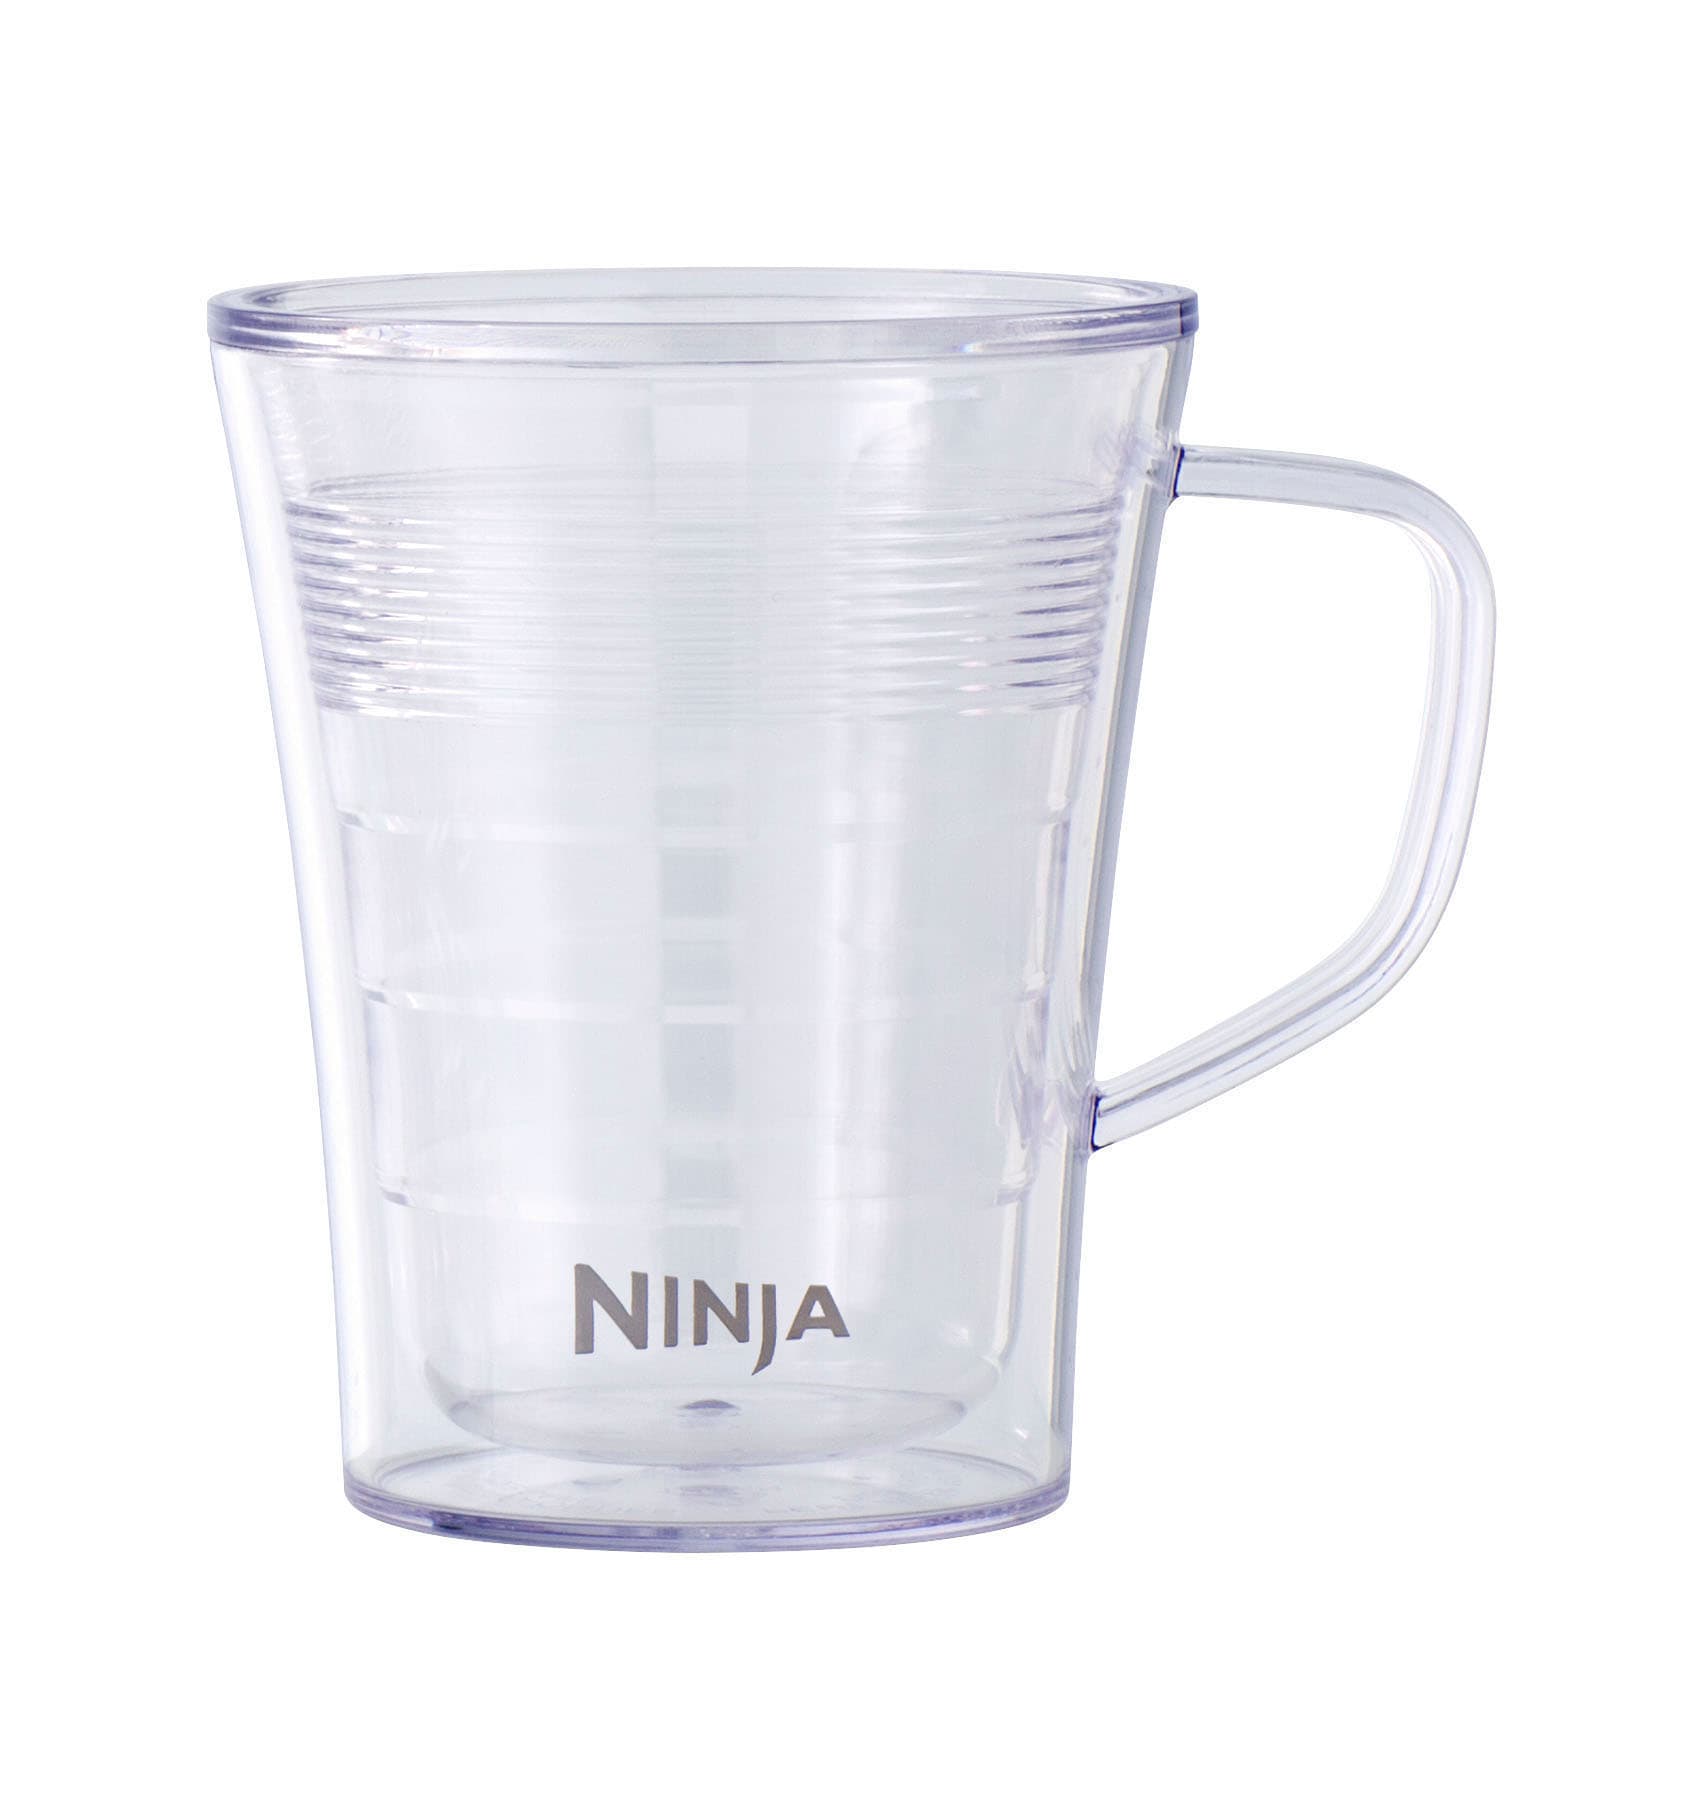 Ninja Insulated Mug at Lowes.com